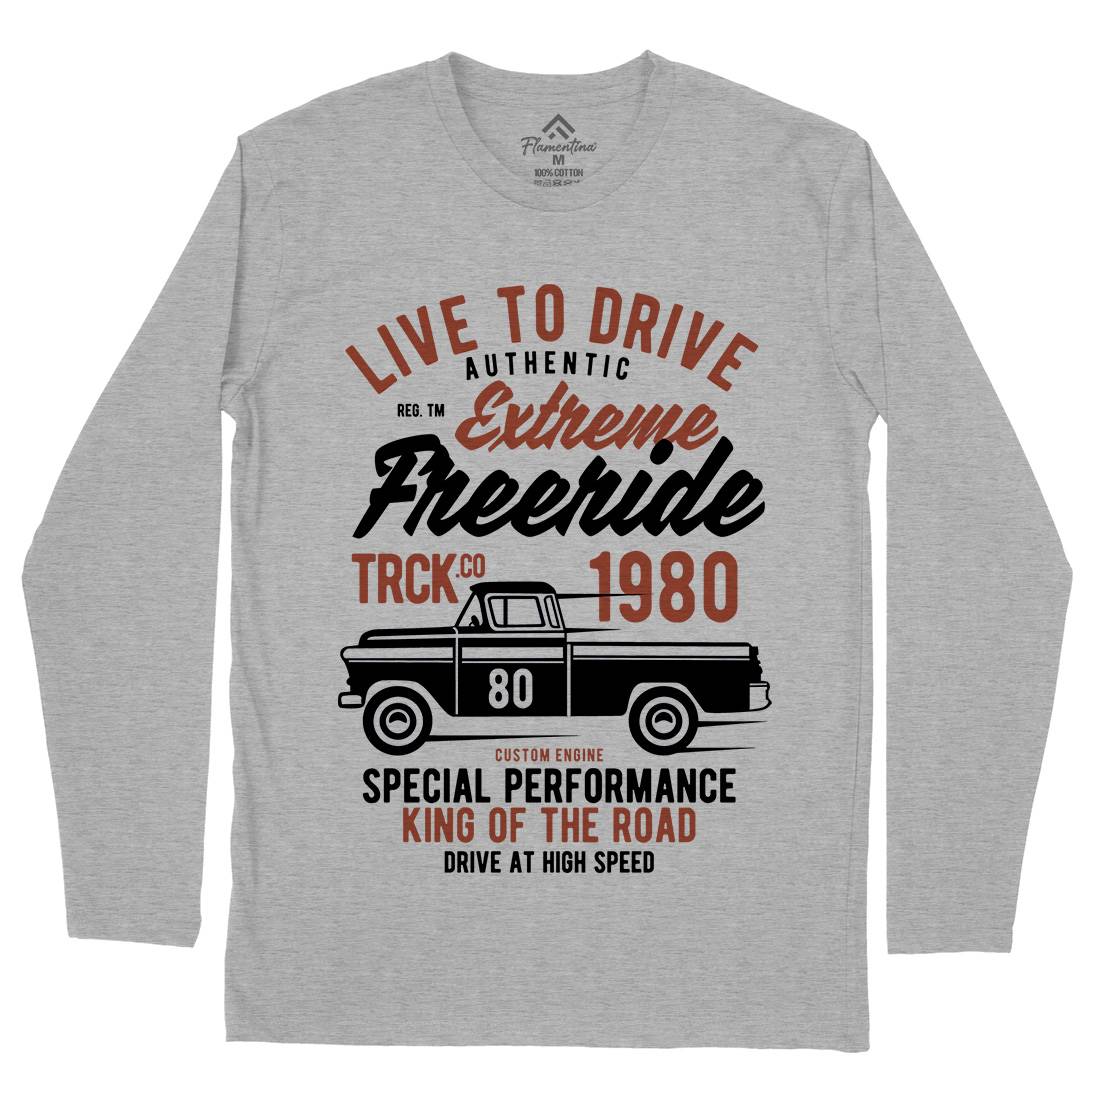 Extreme Freeride Truck Mens Long Sleeve T-Shirt Cars B401